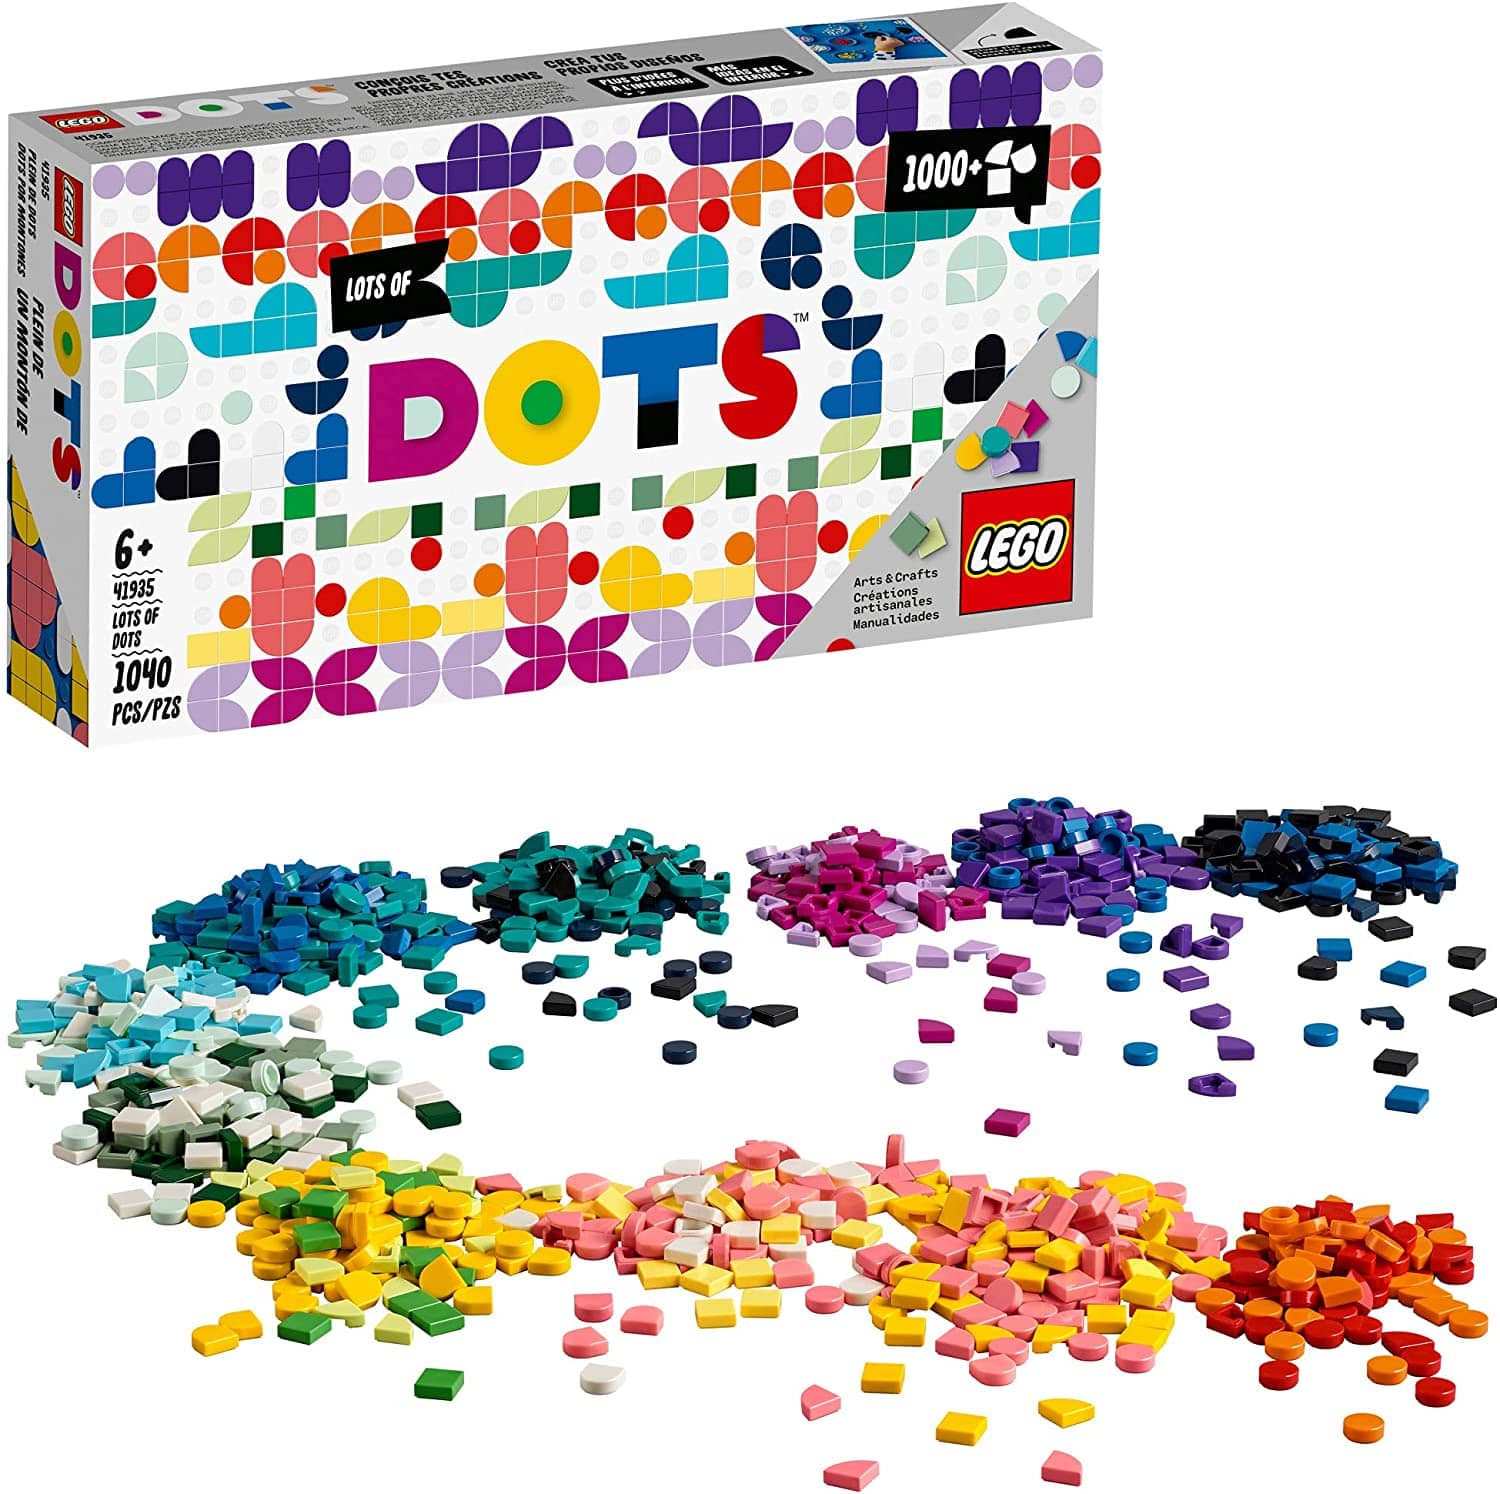 LEGO DOTS LOTS OF DOTS